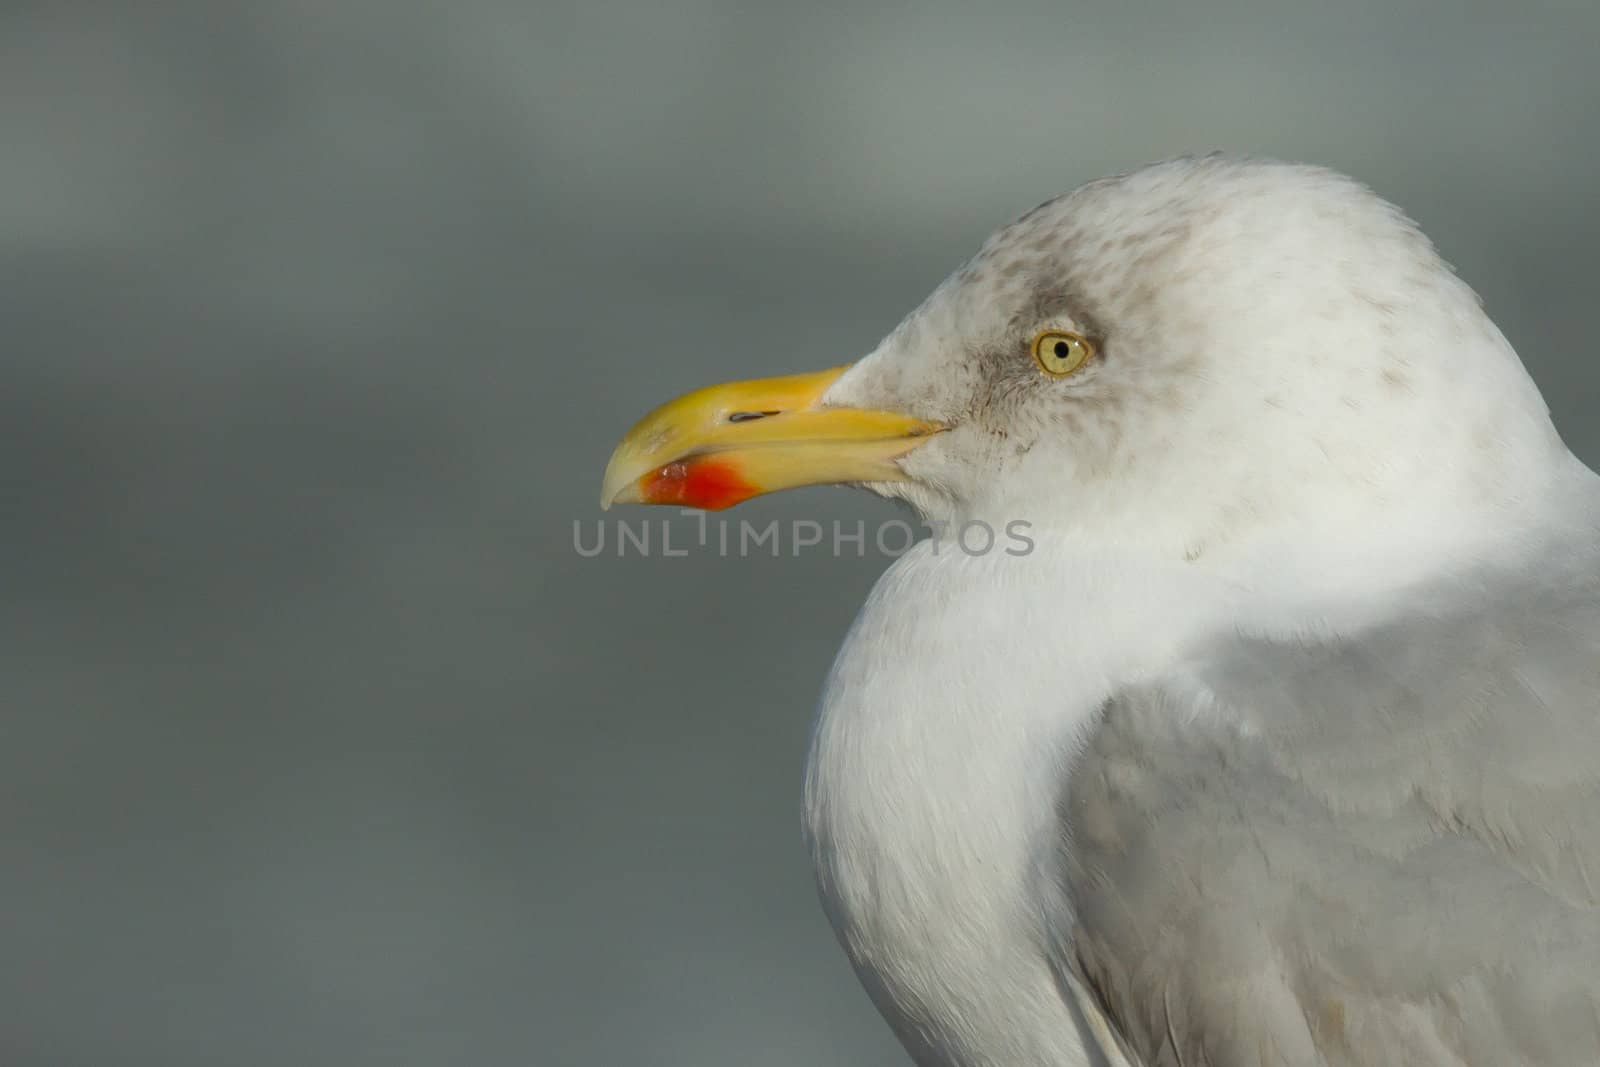 A close-up of a herring gull